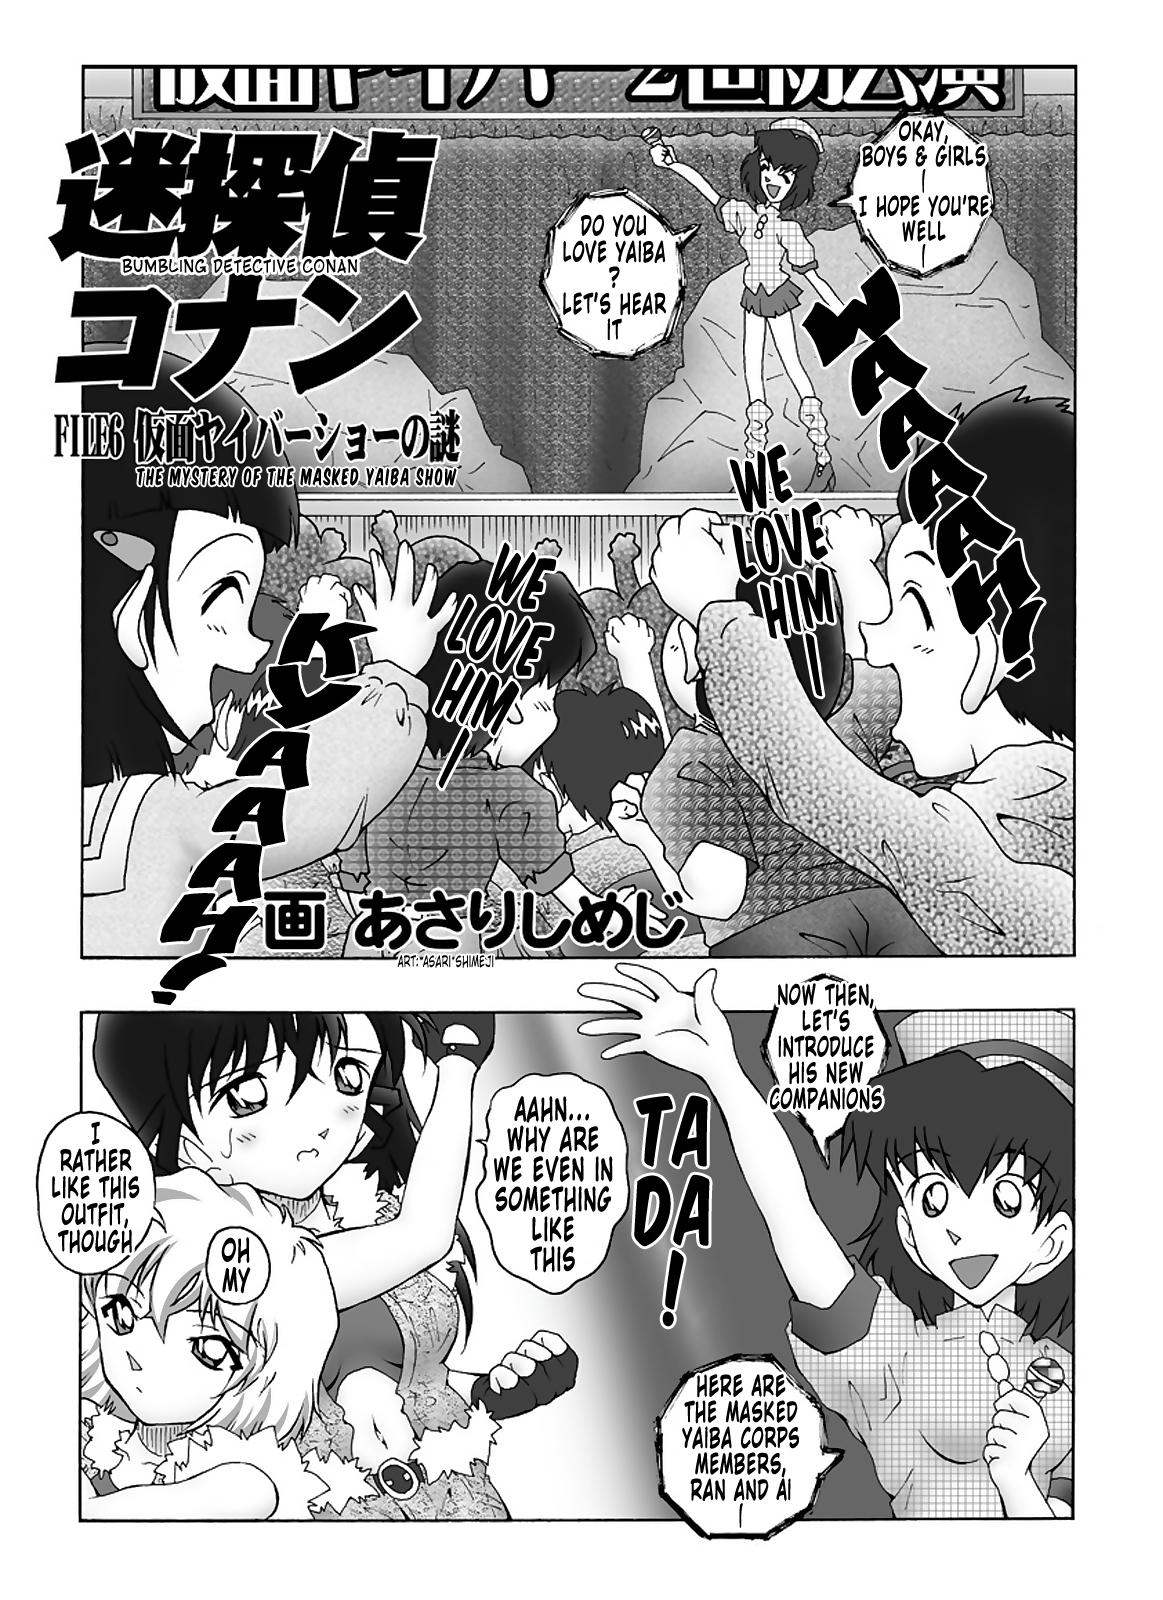 Analfuck Bumbling Detective Conan - File 6: The Mystery Of The Masked Yaiba Show - Detective conan Style - Page 4